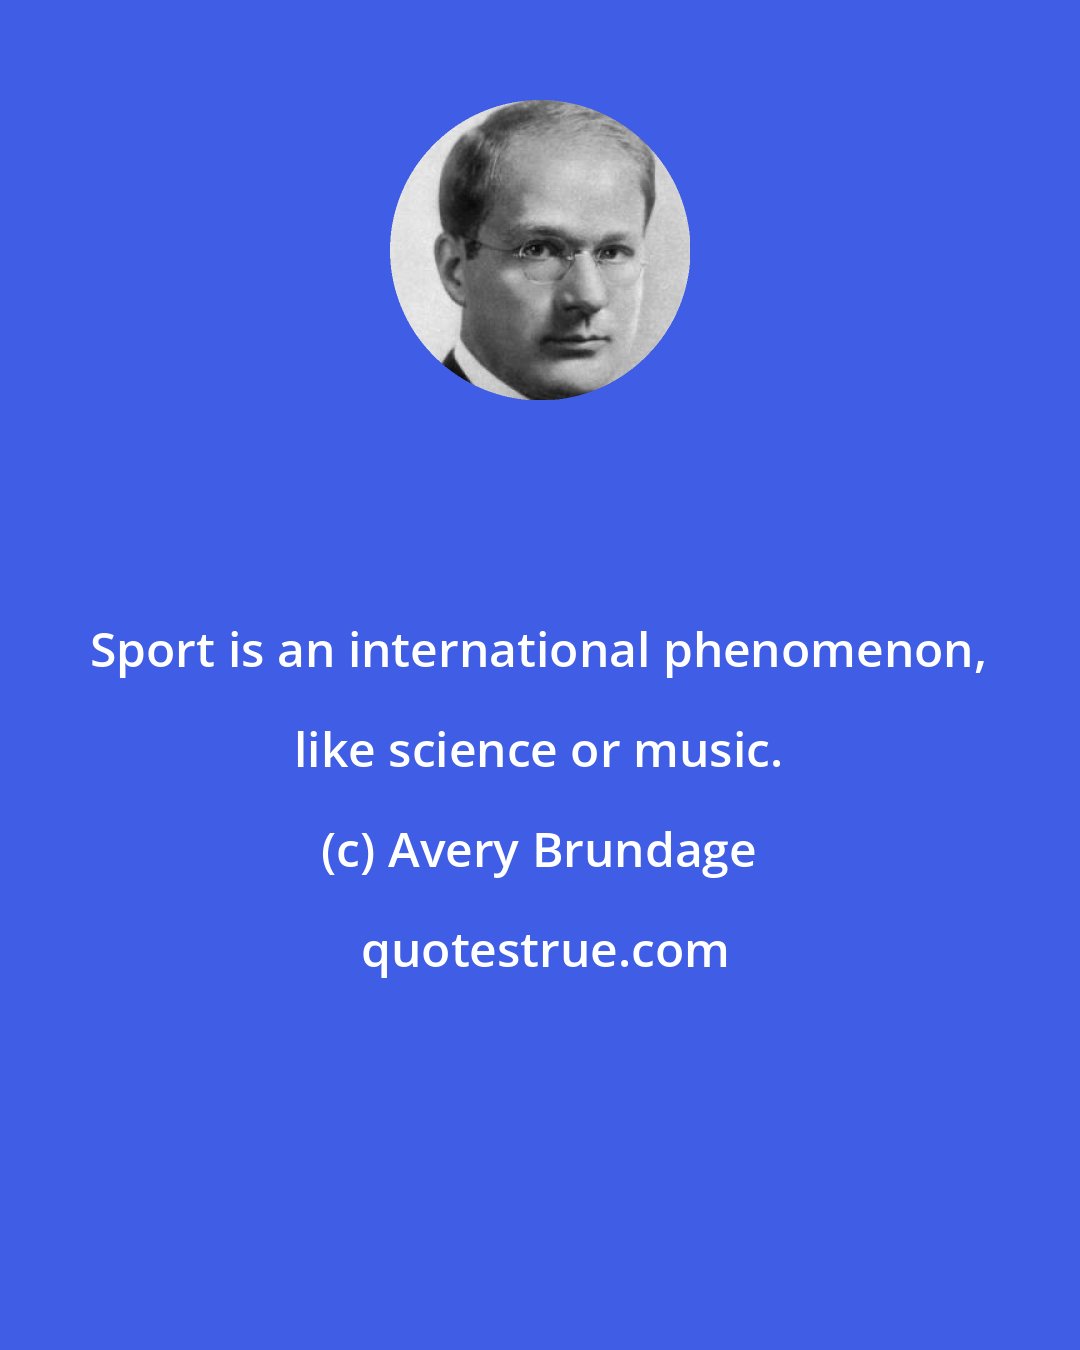 Avery Brundage: Sport is an international phenomenon, like science or music.